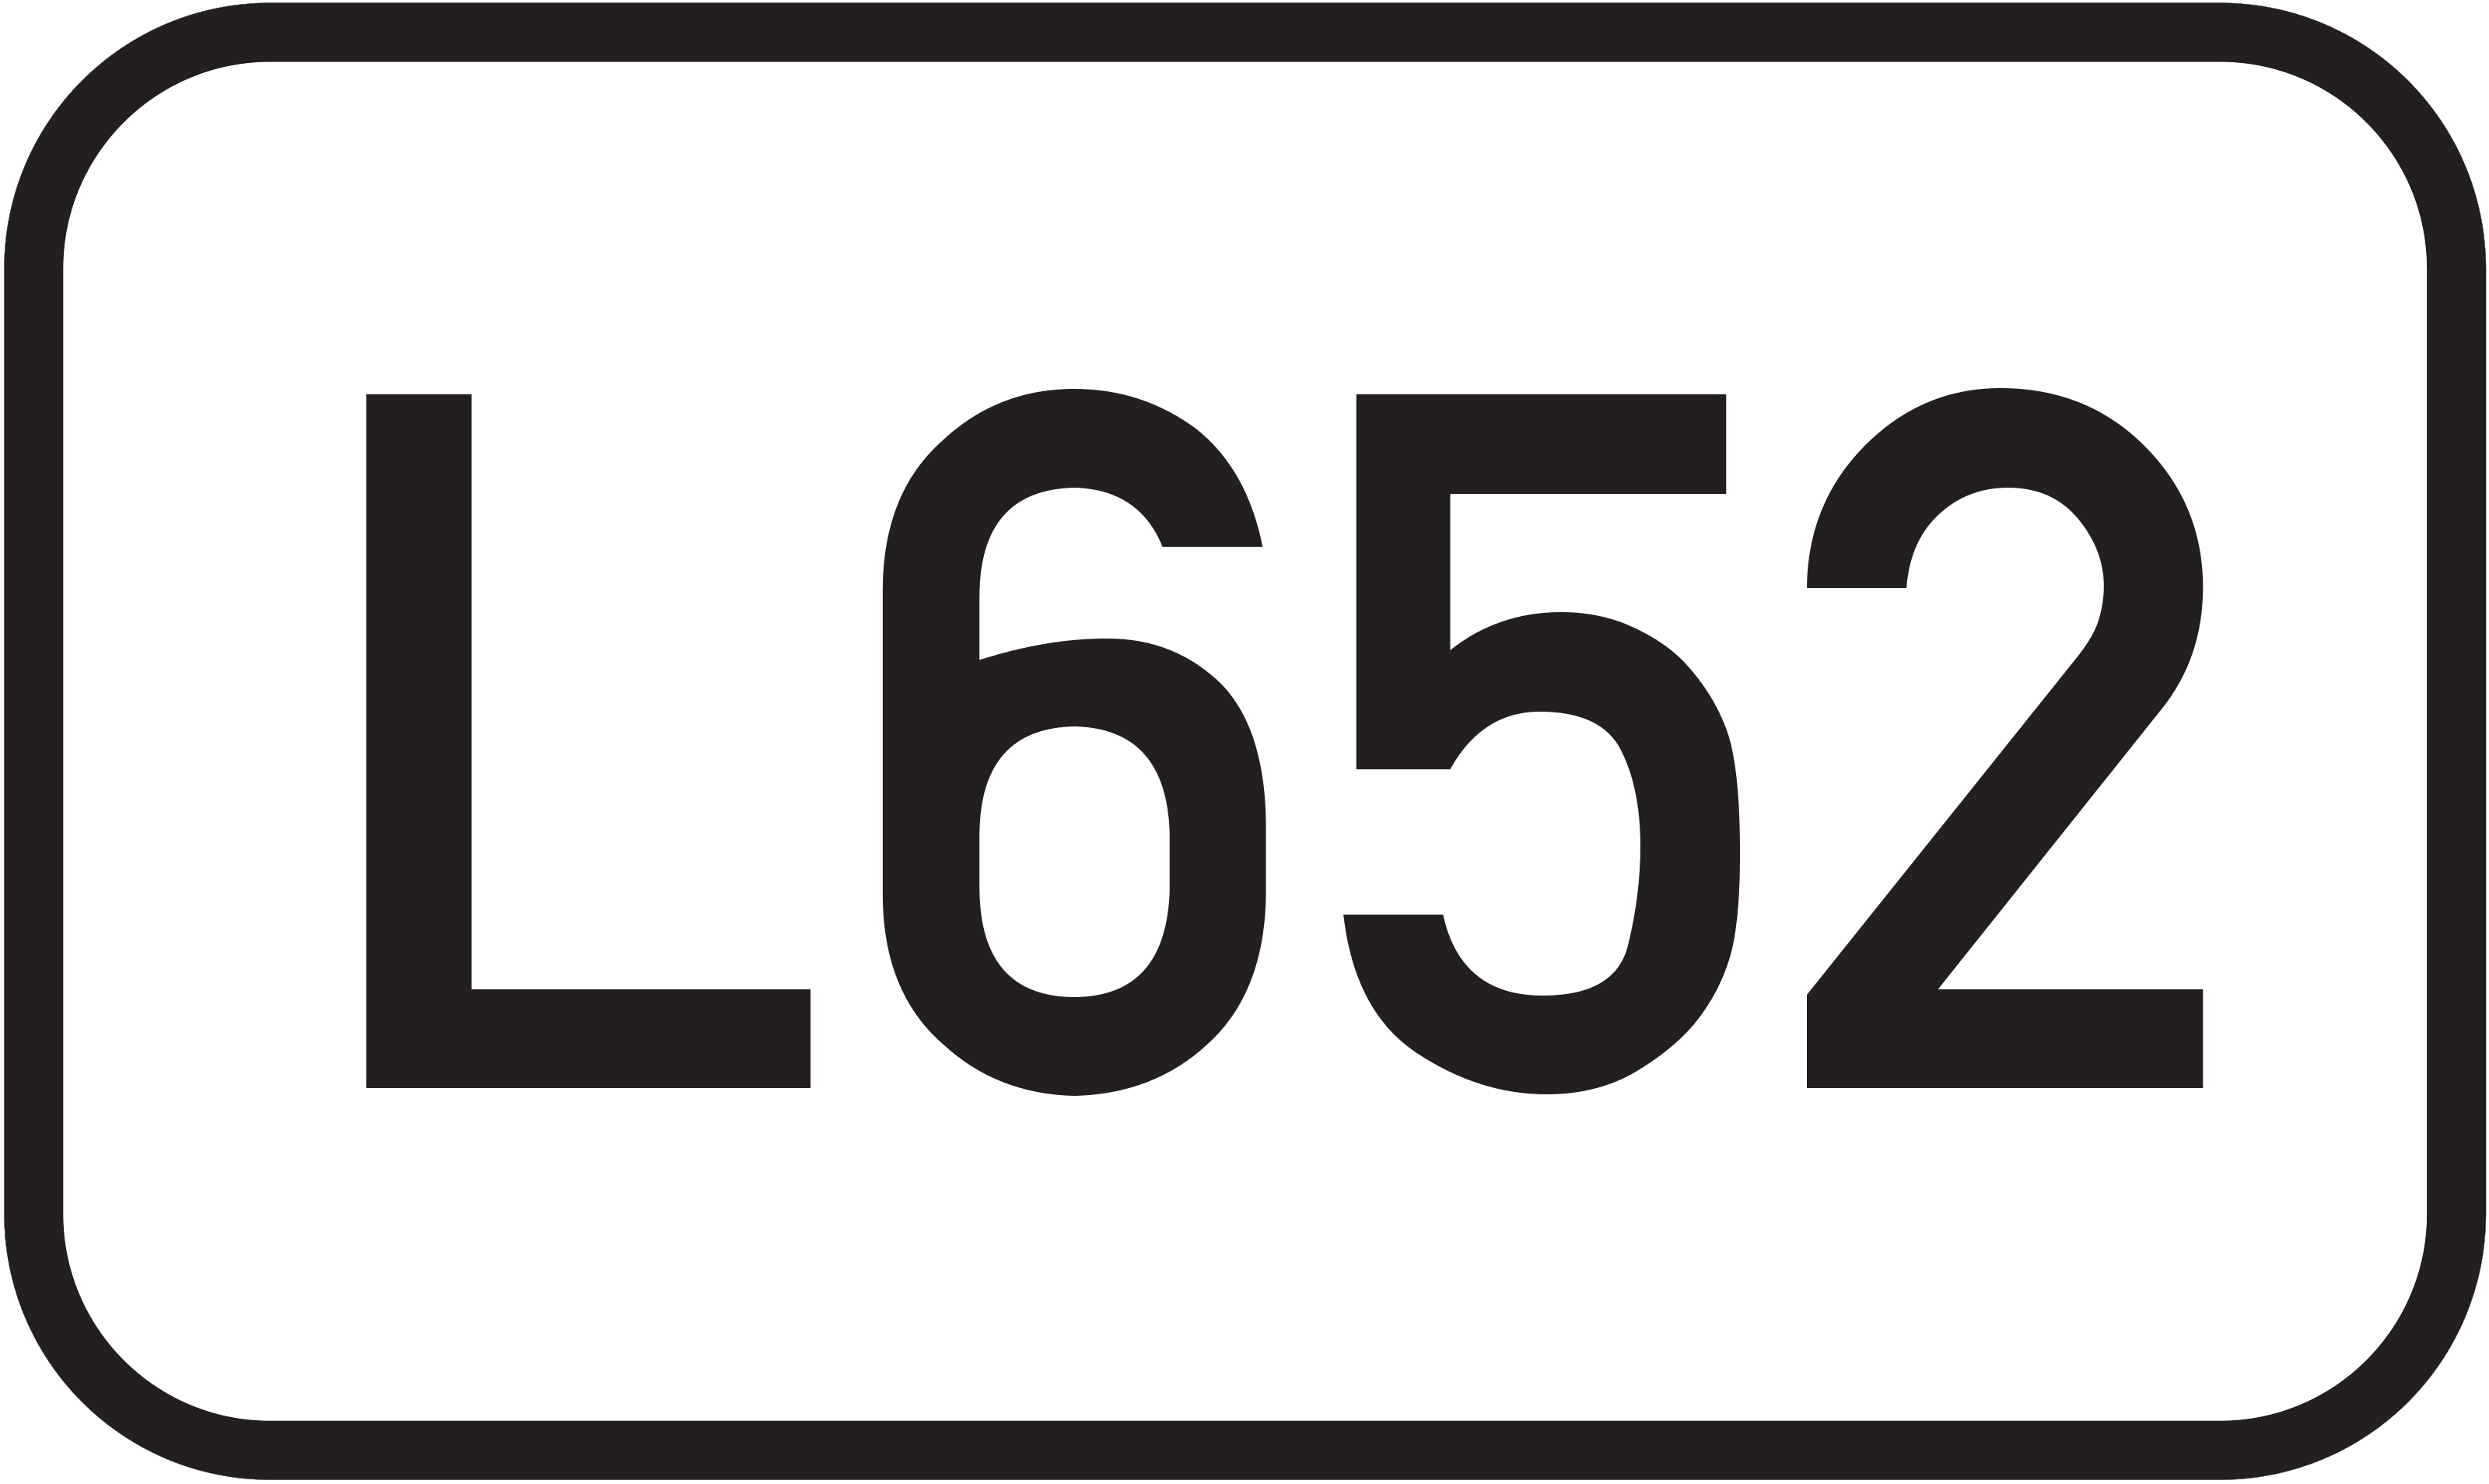 Straßenschild Landesstraße L652